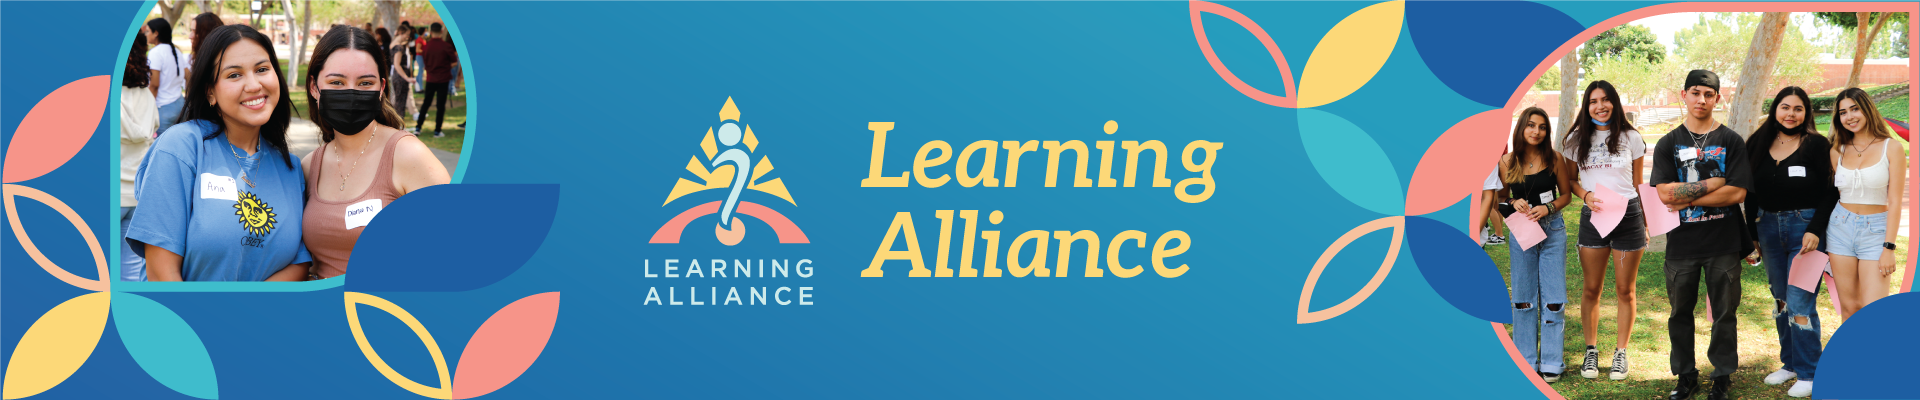 Learning Alliance